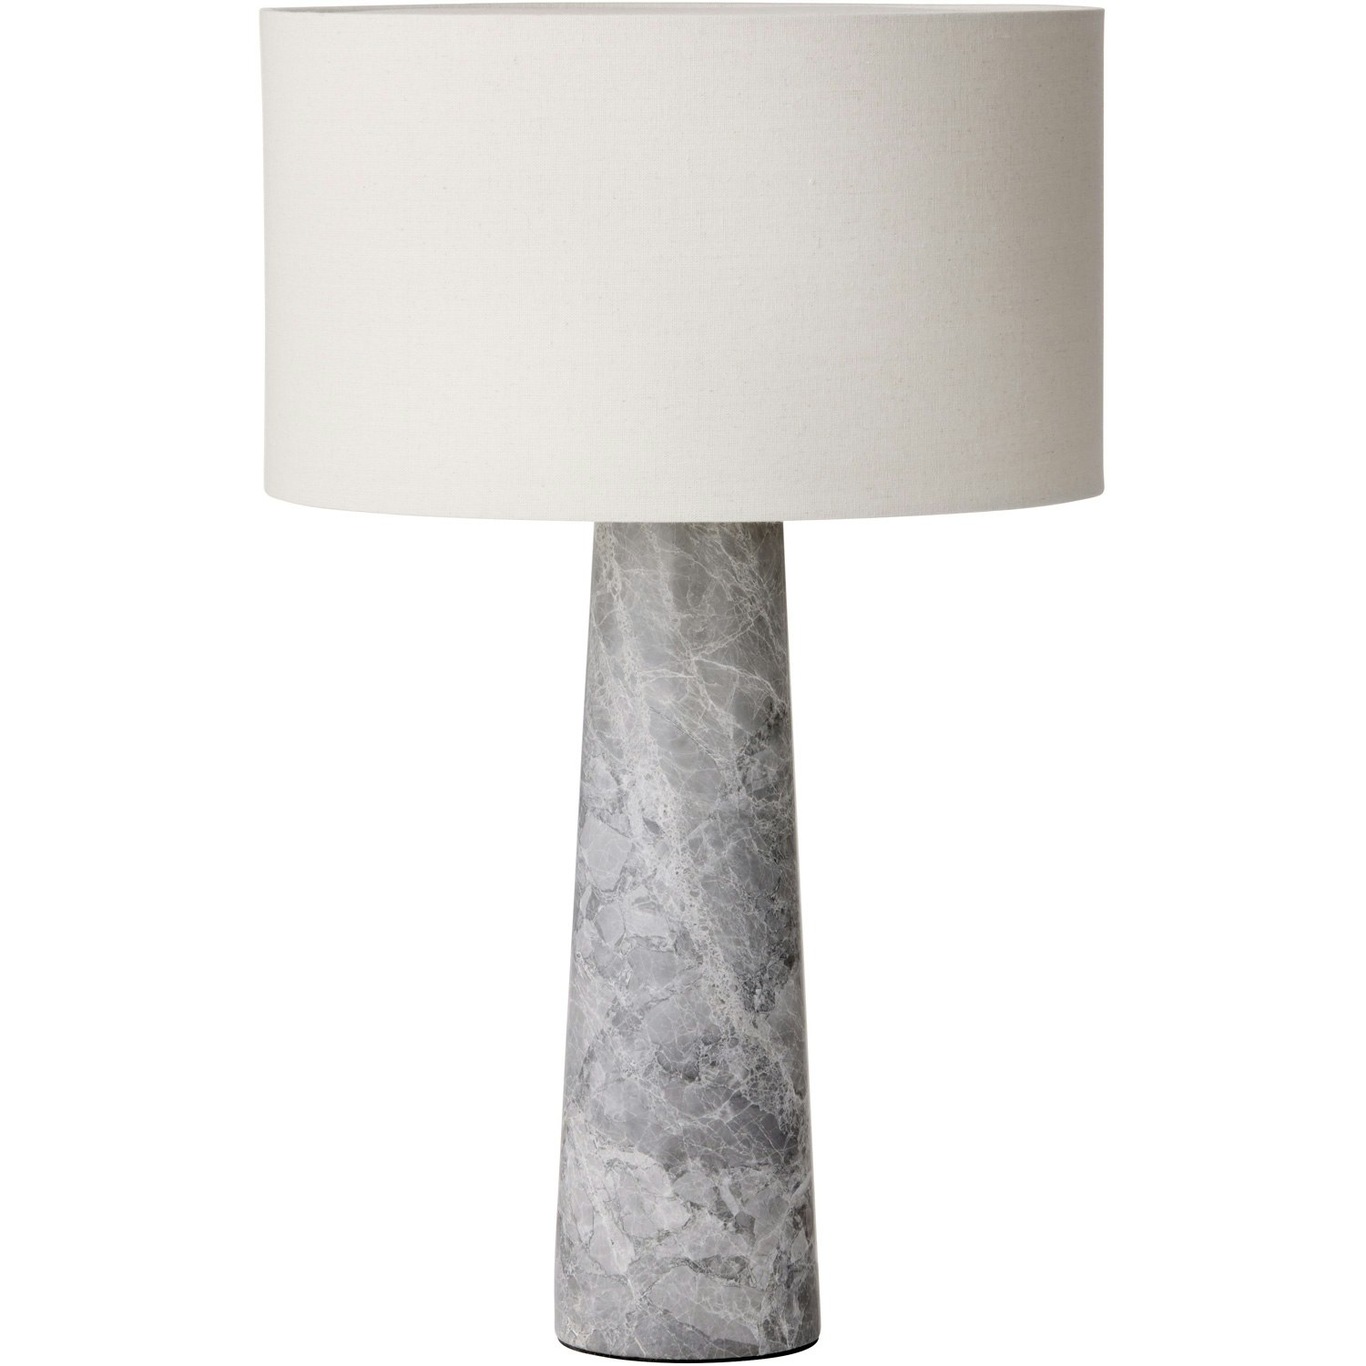 Berta Marble Table Lamp, Light Grey/White